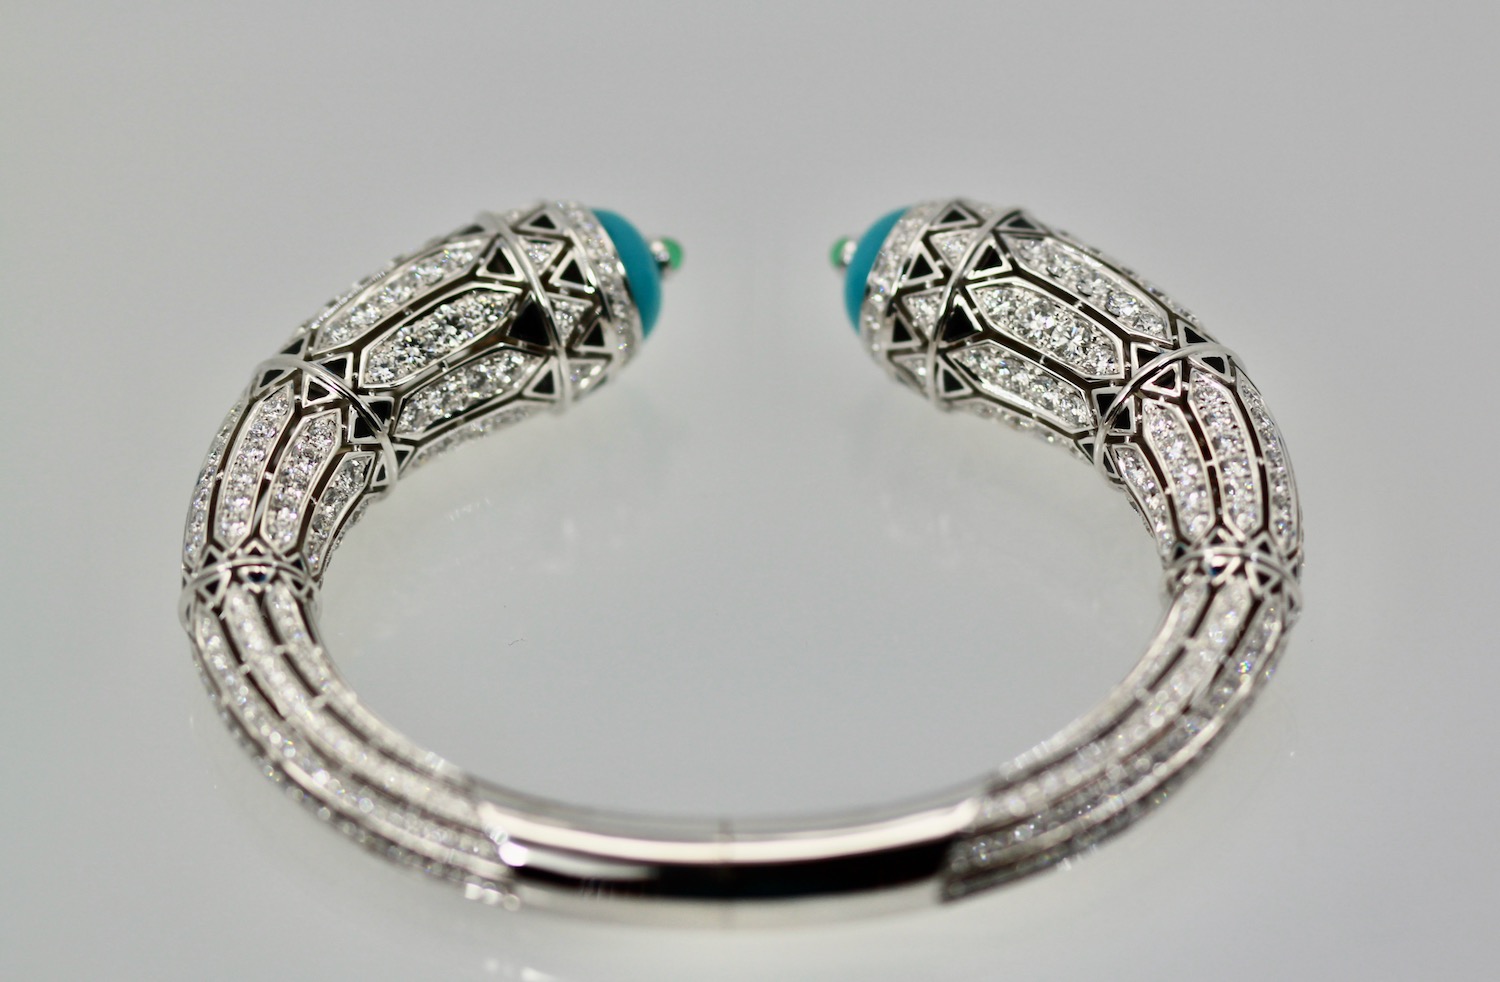  Cartier High Jewelry Diamond Turquoise Bracelet – detail